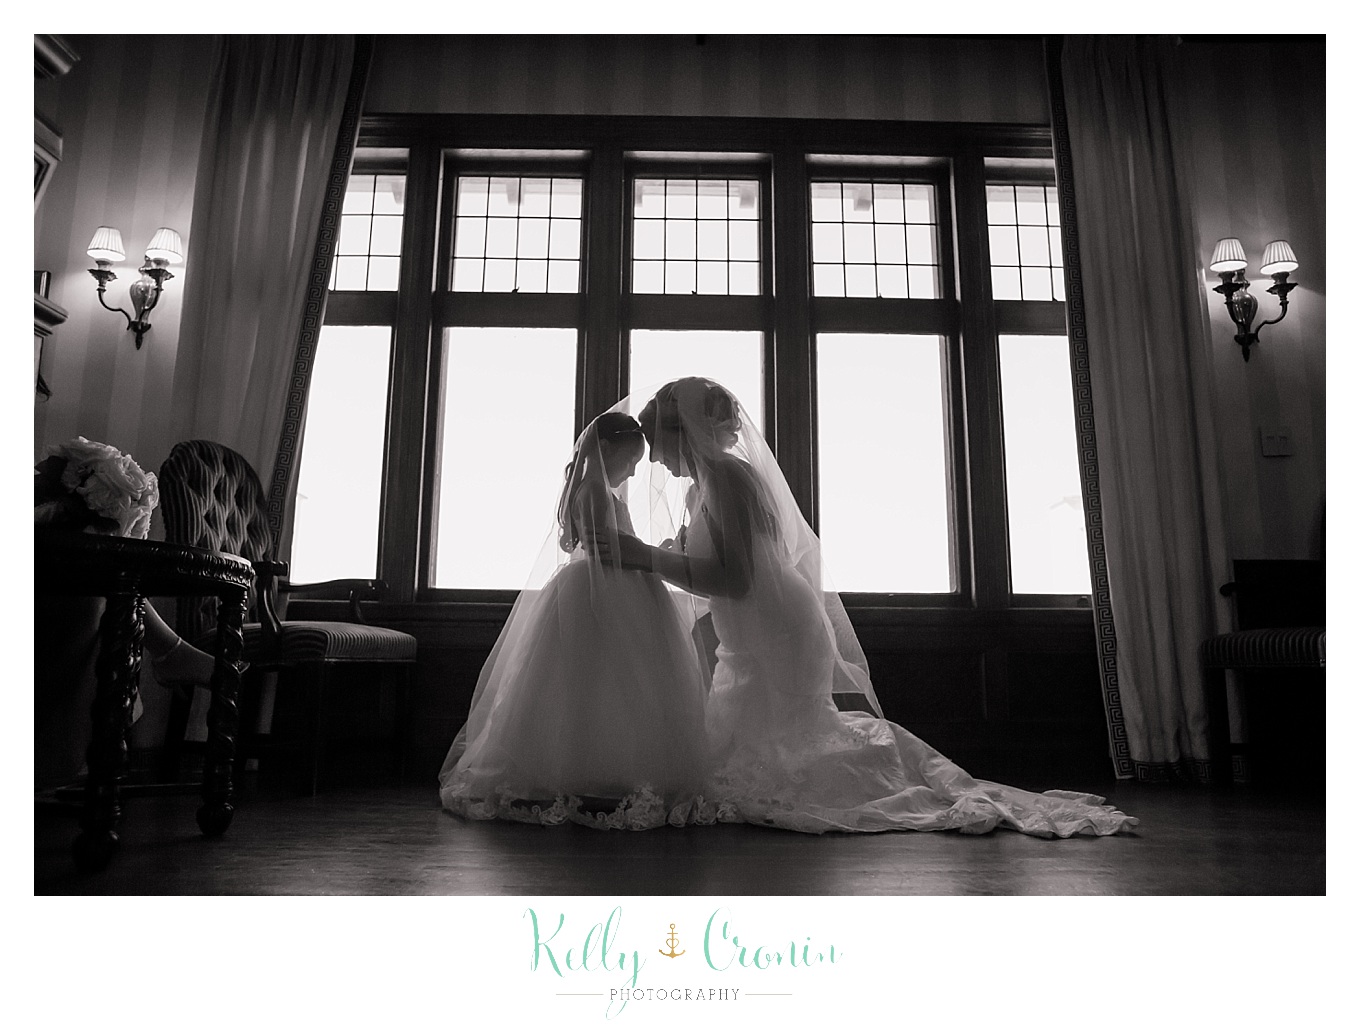 A bride kneels to her flower girl | Kelly Cronin Photography | Resort Wedding in Cape Cod